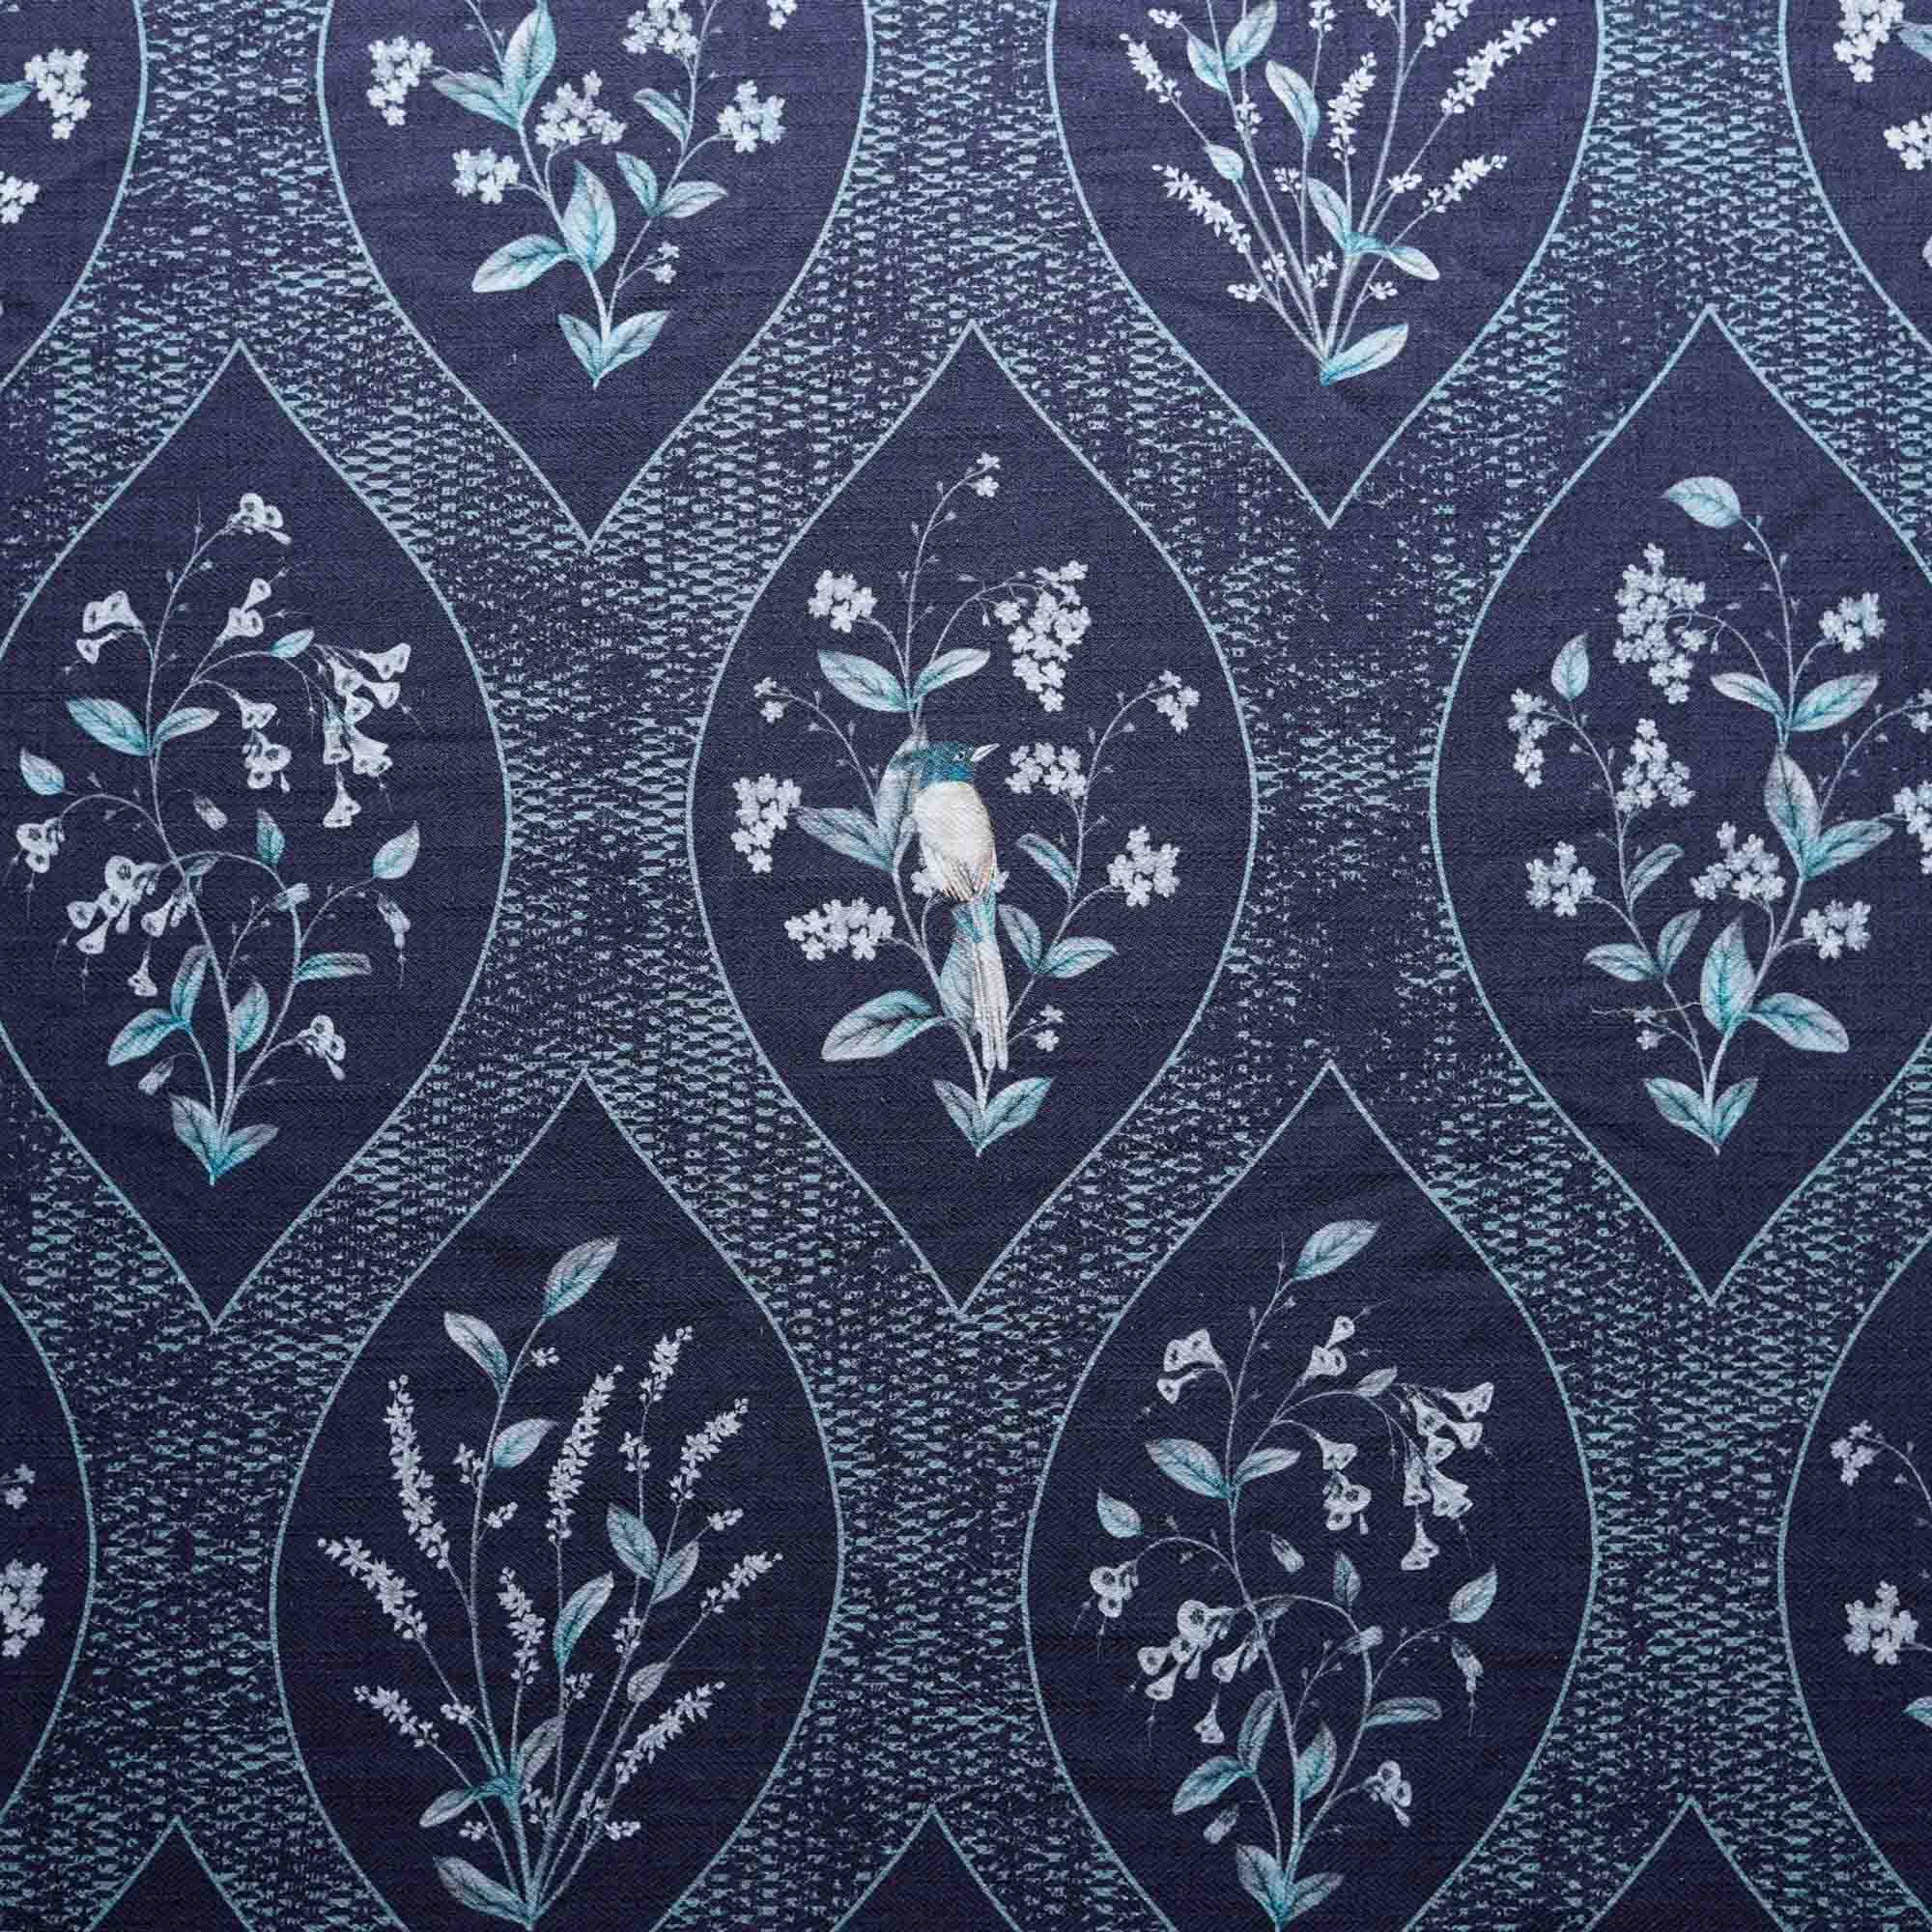 A Persian Corridor Winter Cotton Linen Blend Fabric (Horizontal Repeat)